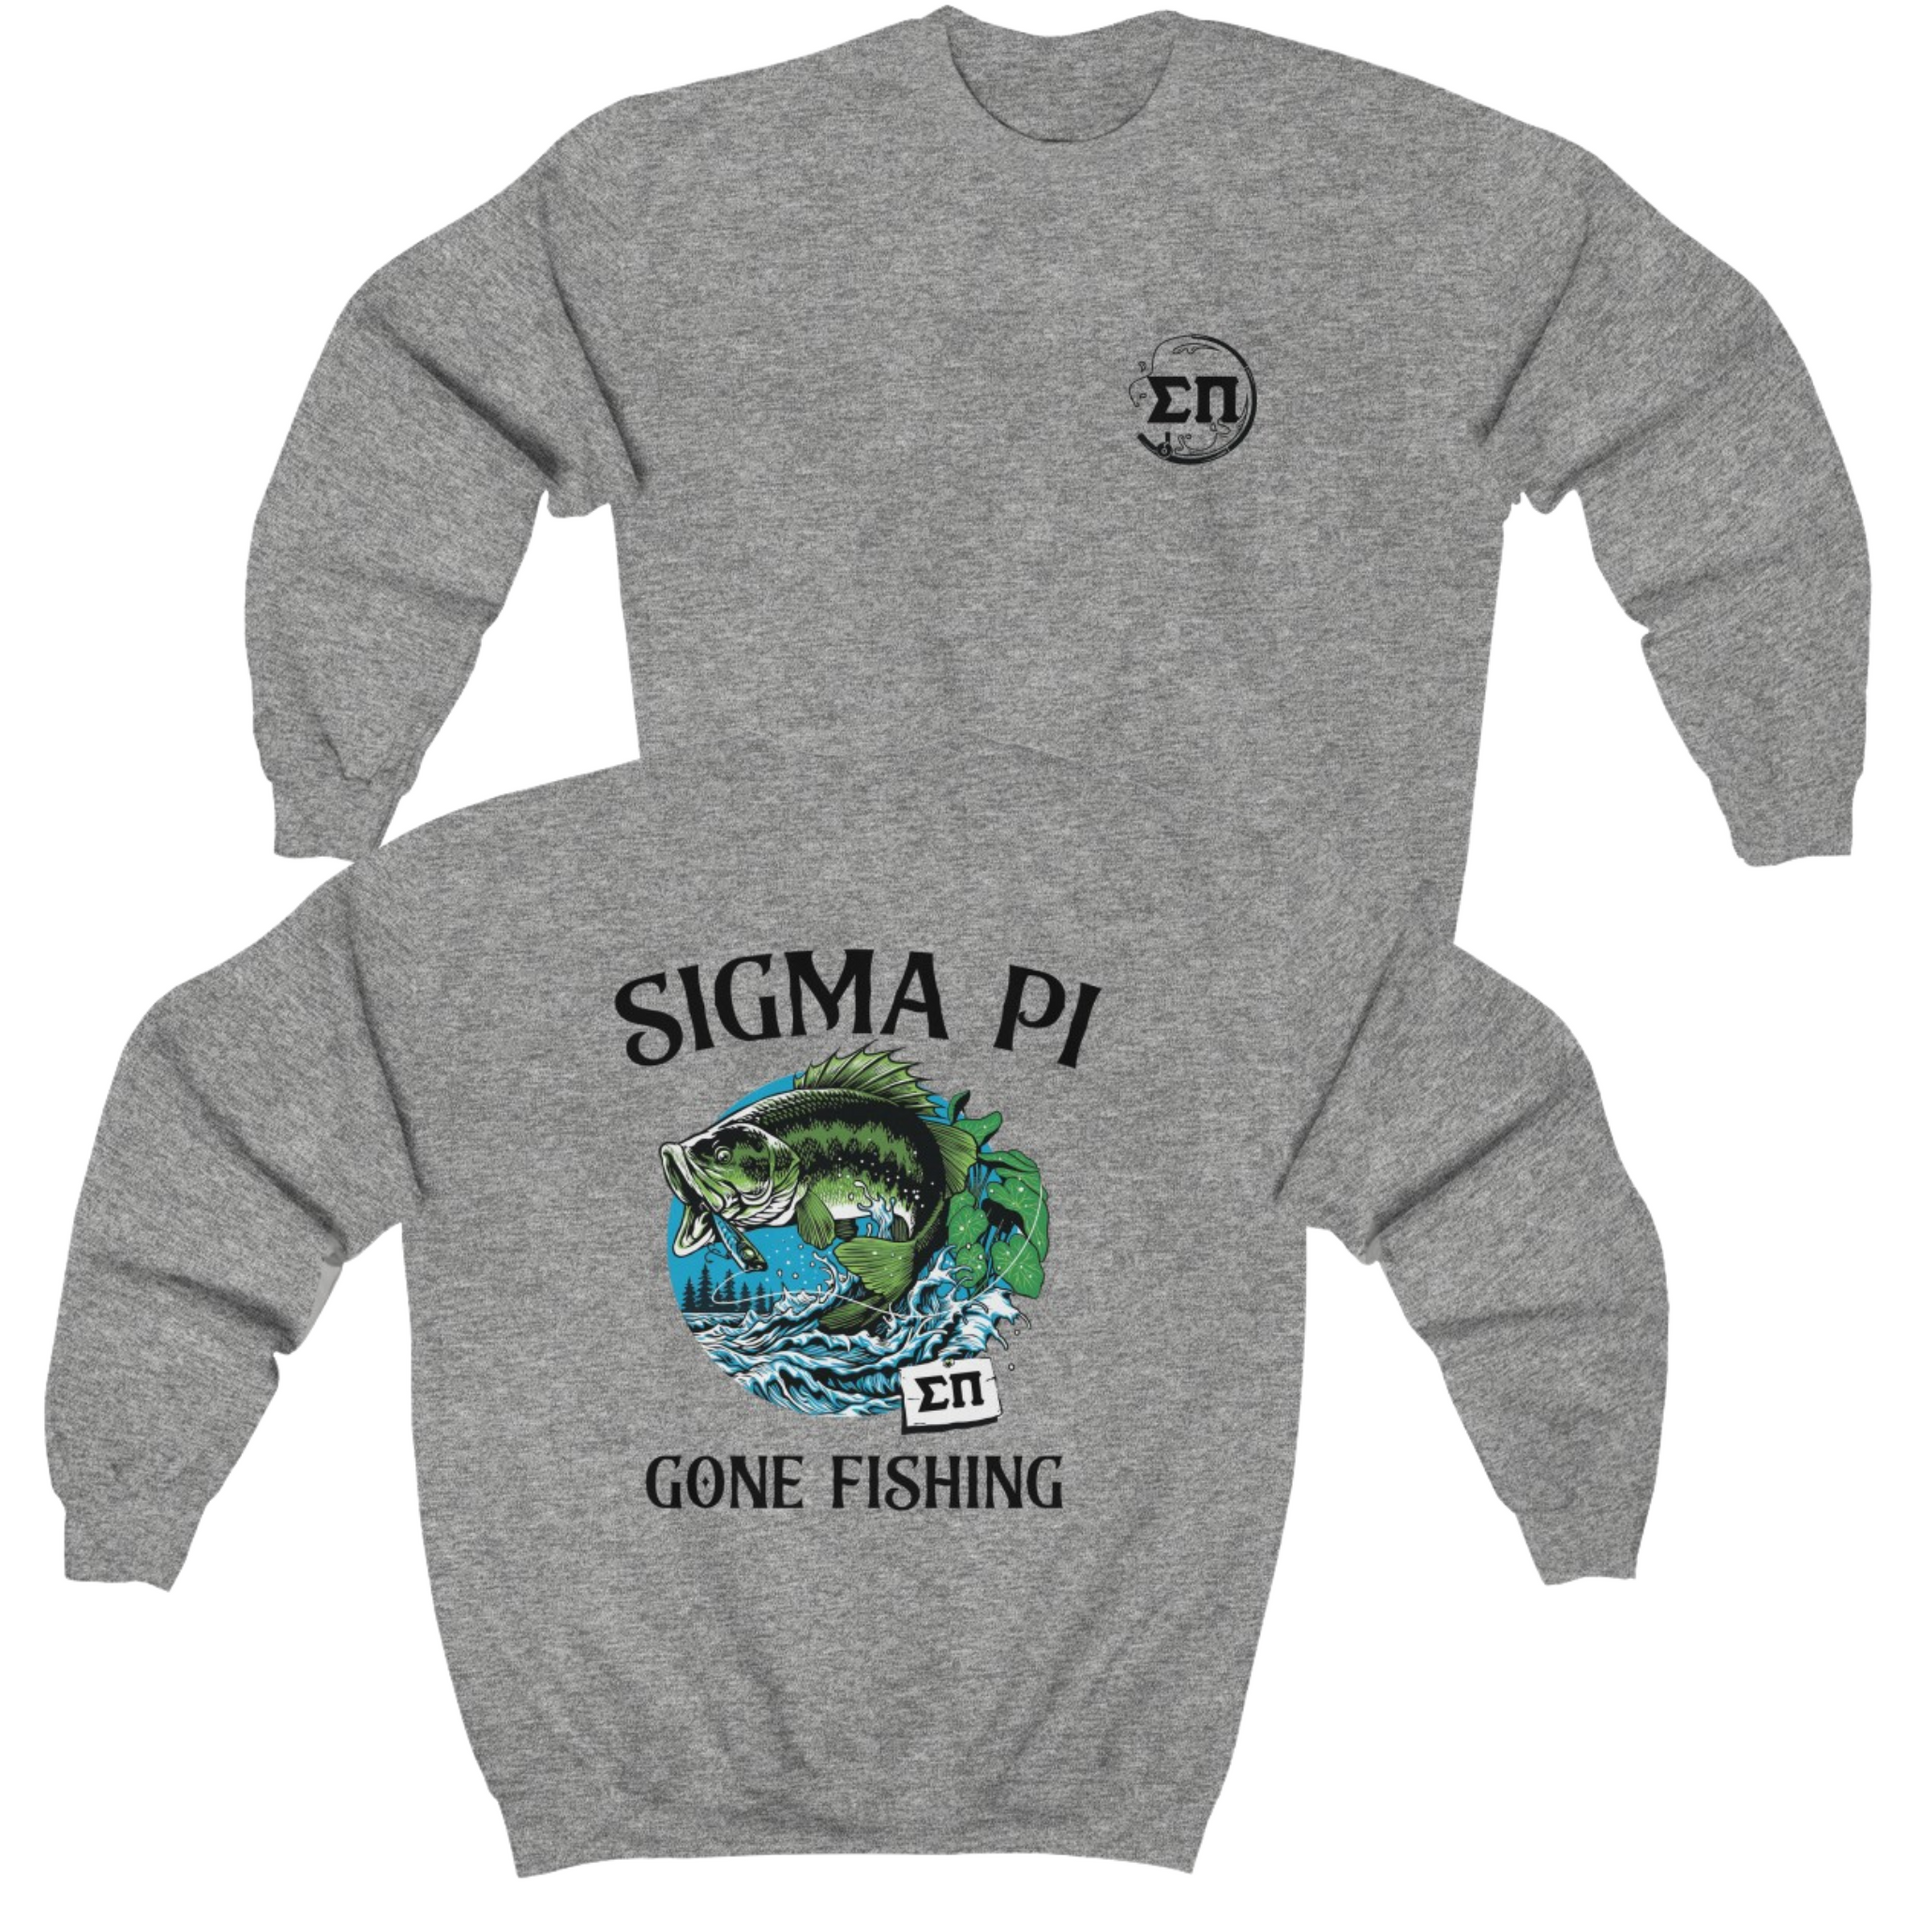 Grey Sigma Pi Graphic Crewneck Sweatshirt | Gone Fishing | Sigma Pi Apparel and Merchandise